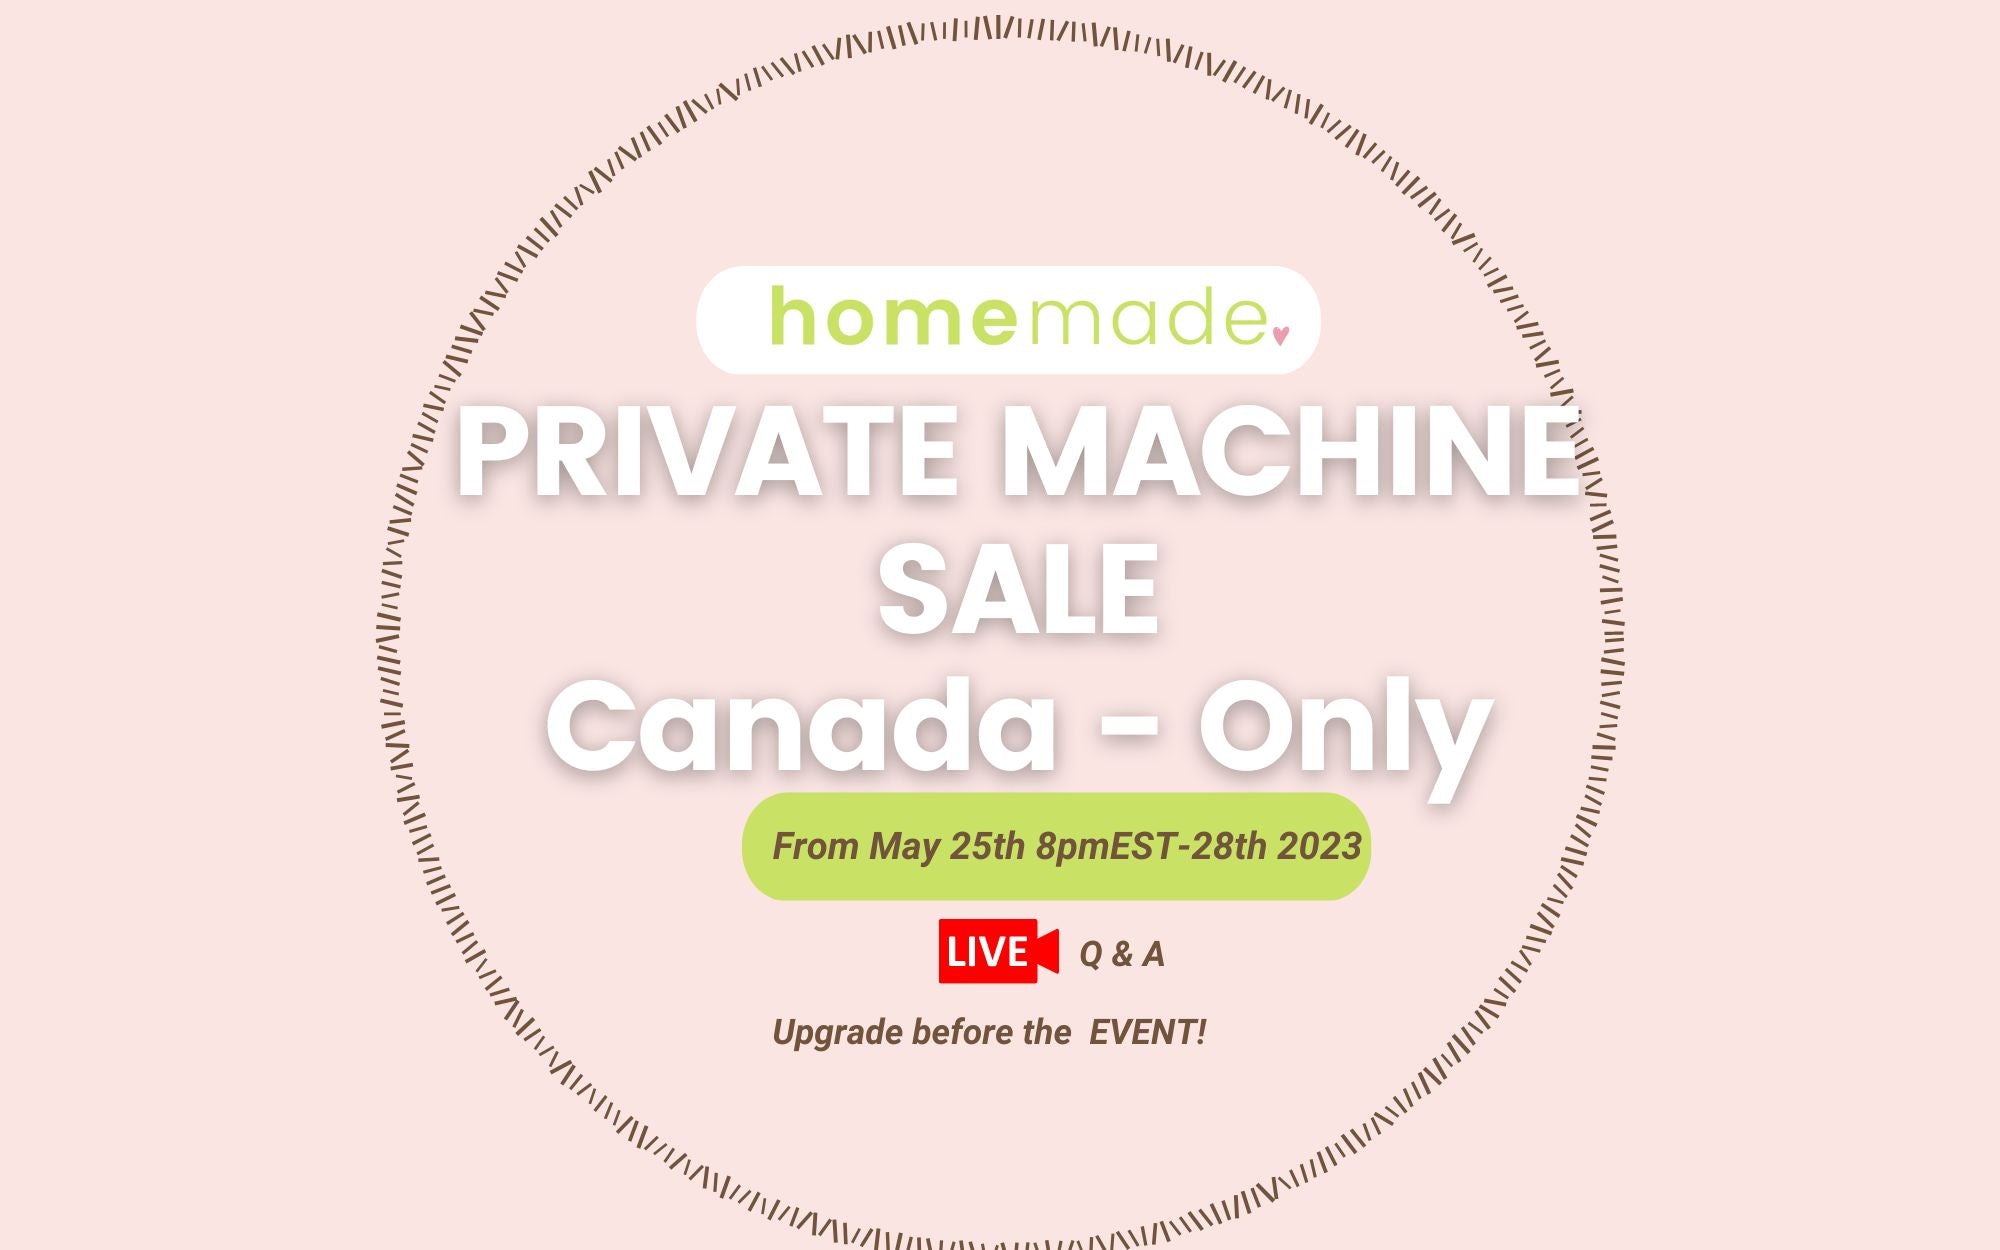 PRIVATE MACHINE SALE - CANADA